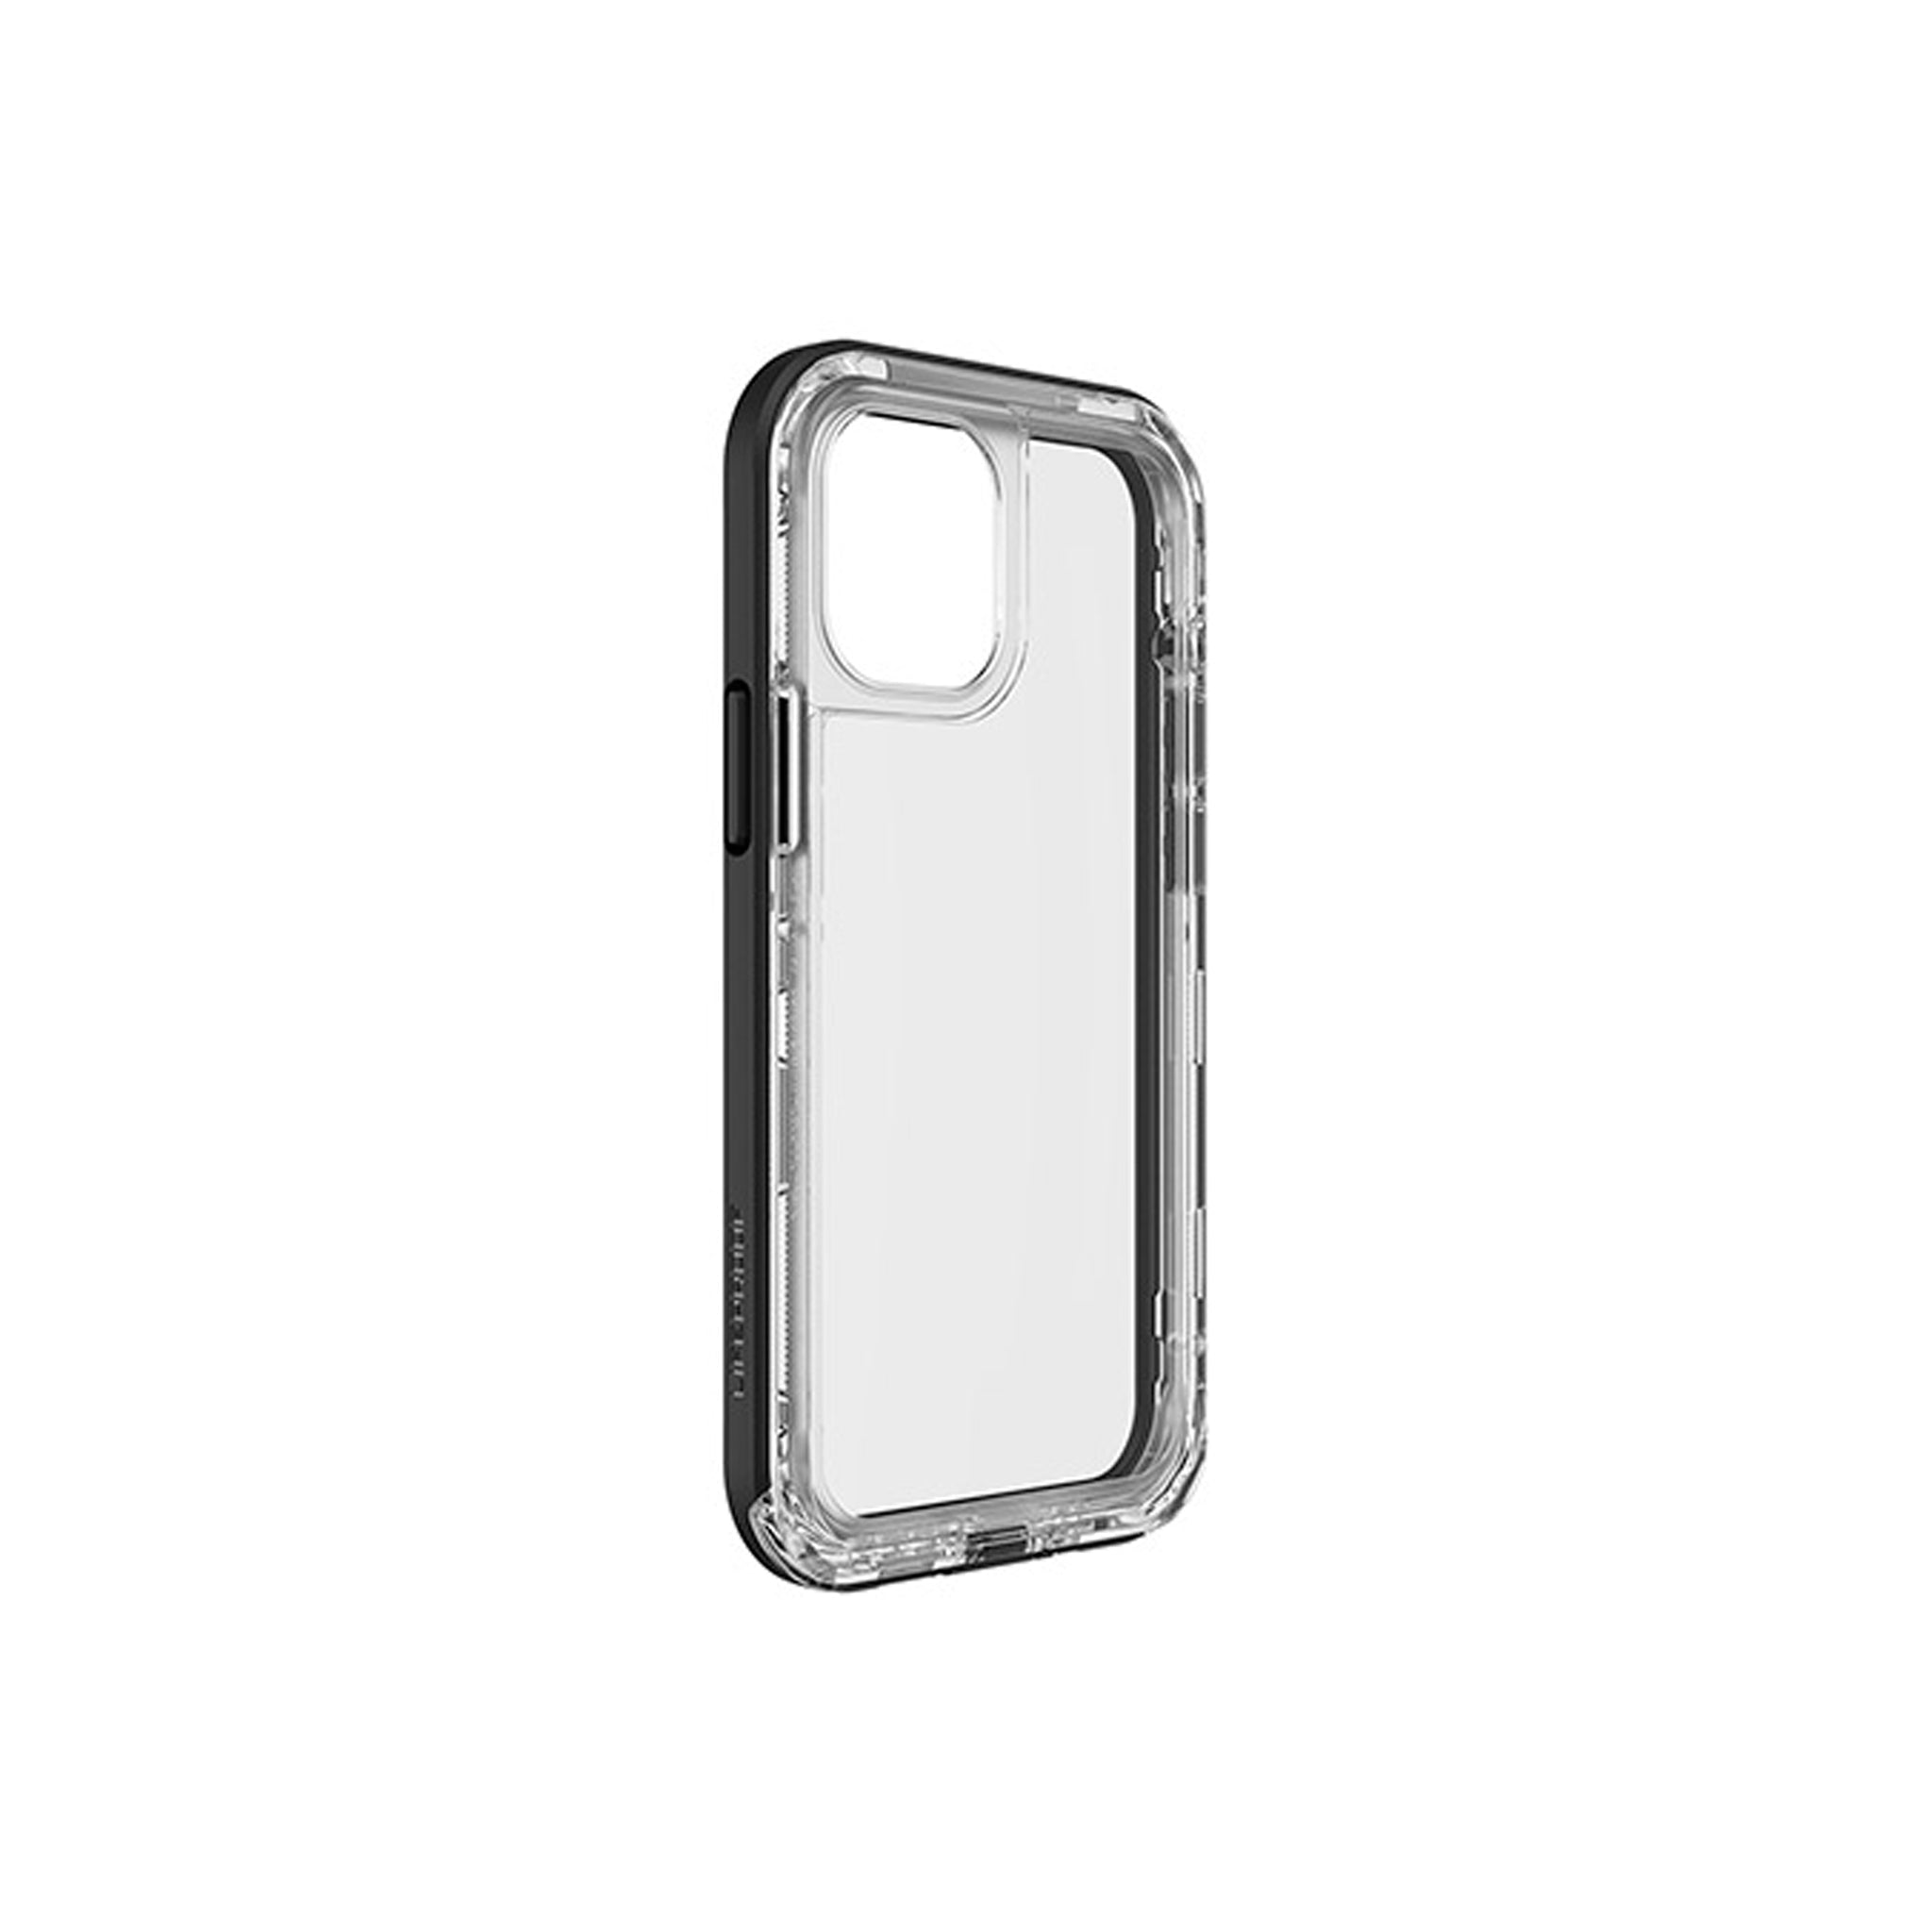 LifeProo - Next for iPhone 12 mini - Black Crystal